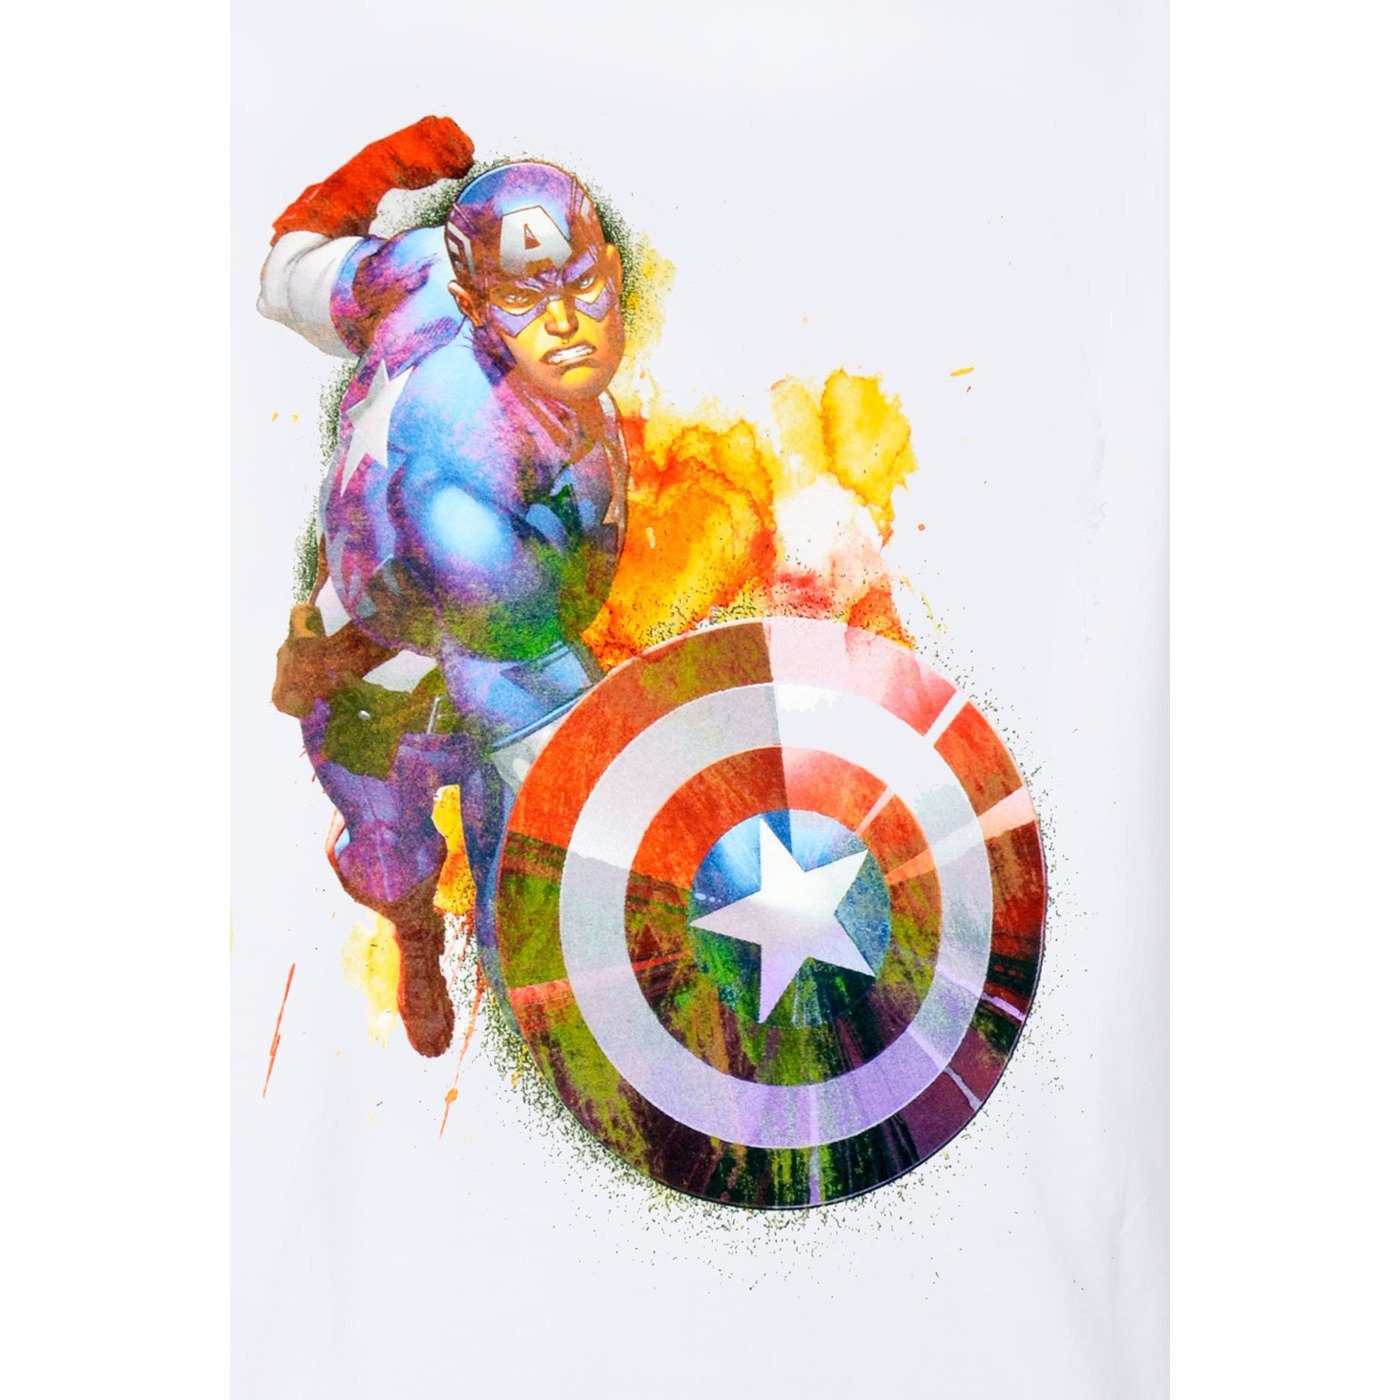 Weiß Marvel America T-Shirt für – Captain Labels® Männer United T-Shirt